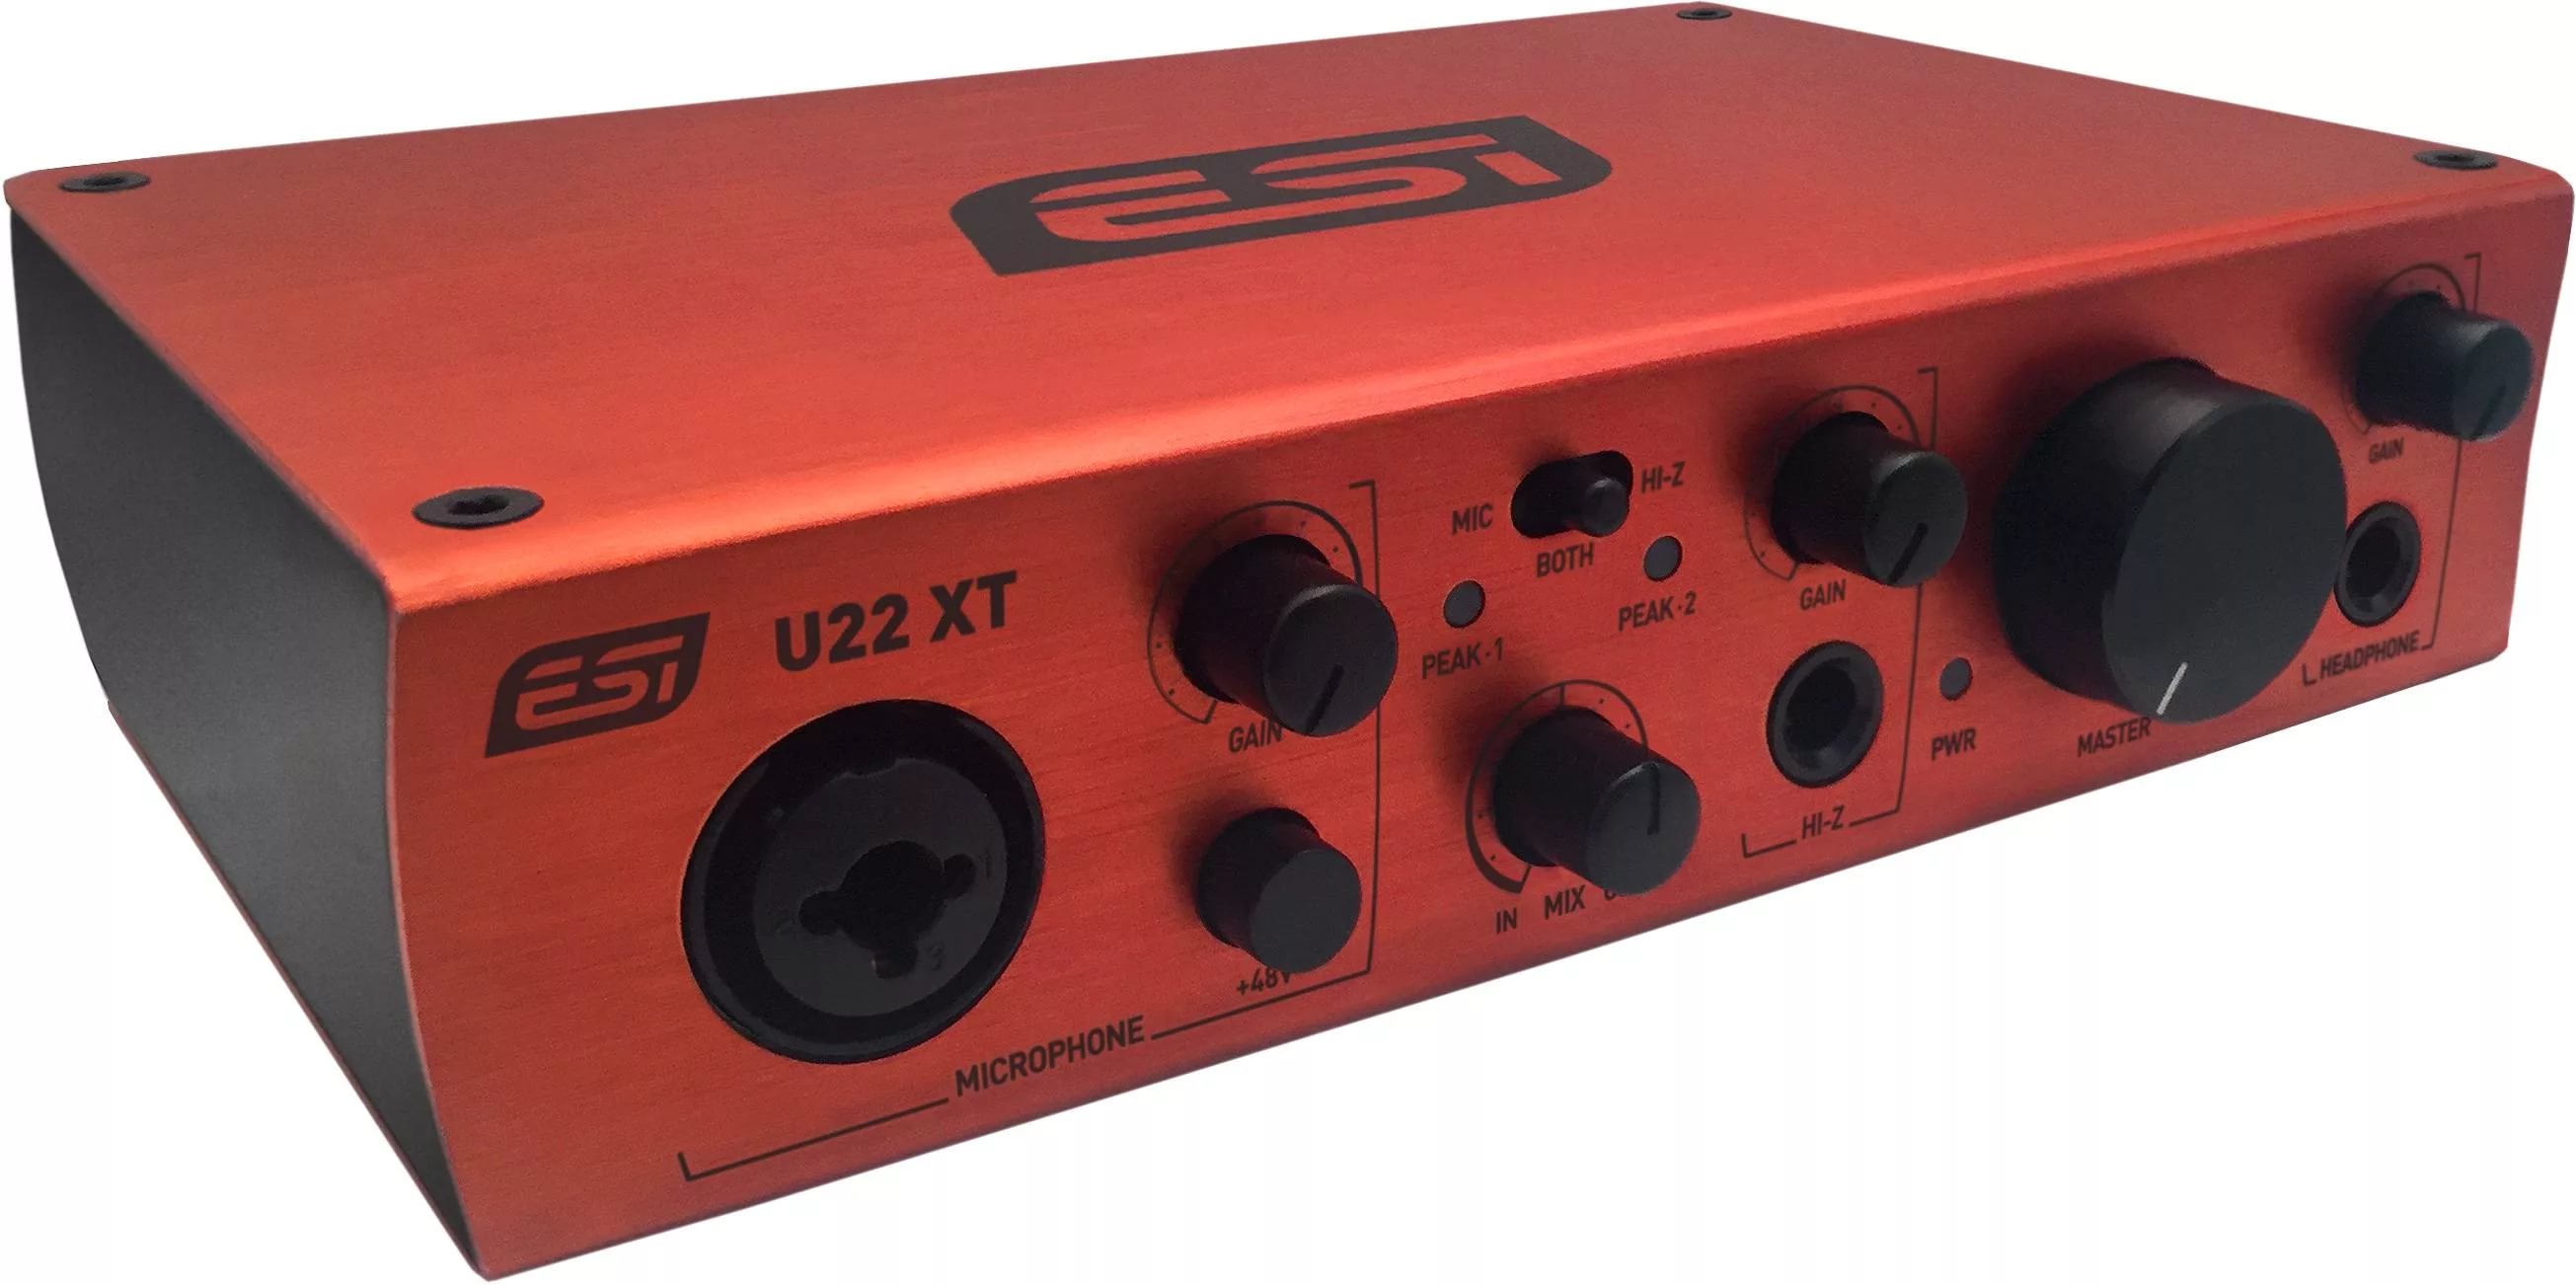 ESI U22 XT - USB аудио интерфейс, 24бит/96кГц, 2xRCA/2x1/8" TRS Jack входа/выхода, 1/4" TS/XLR комбо